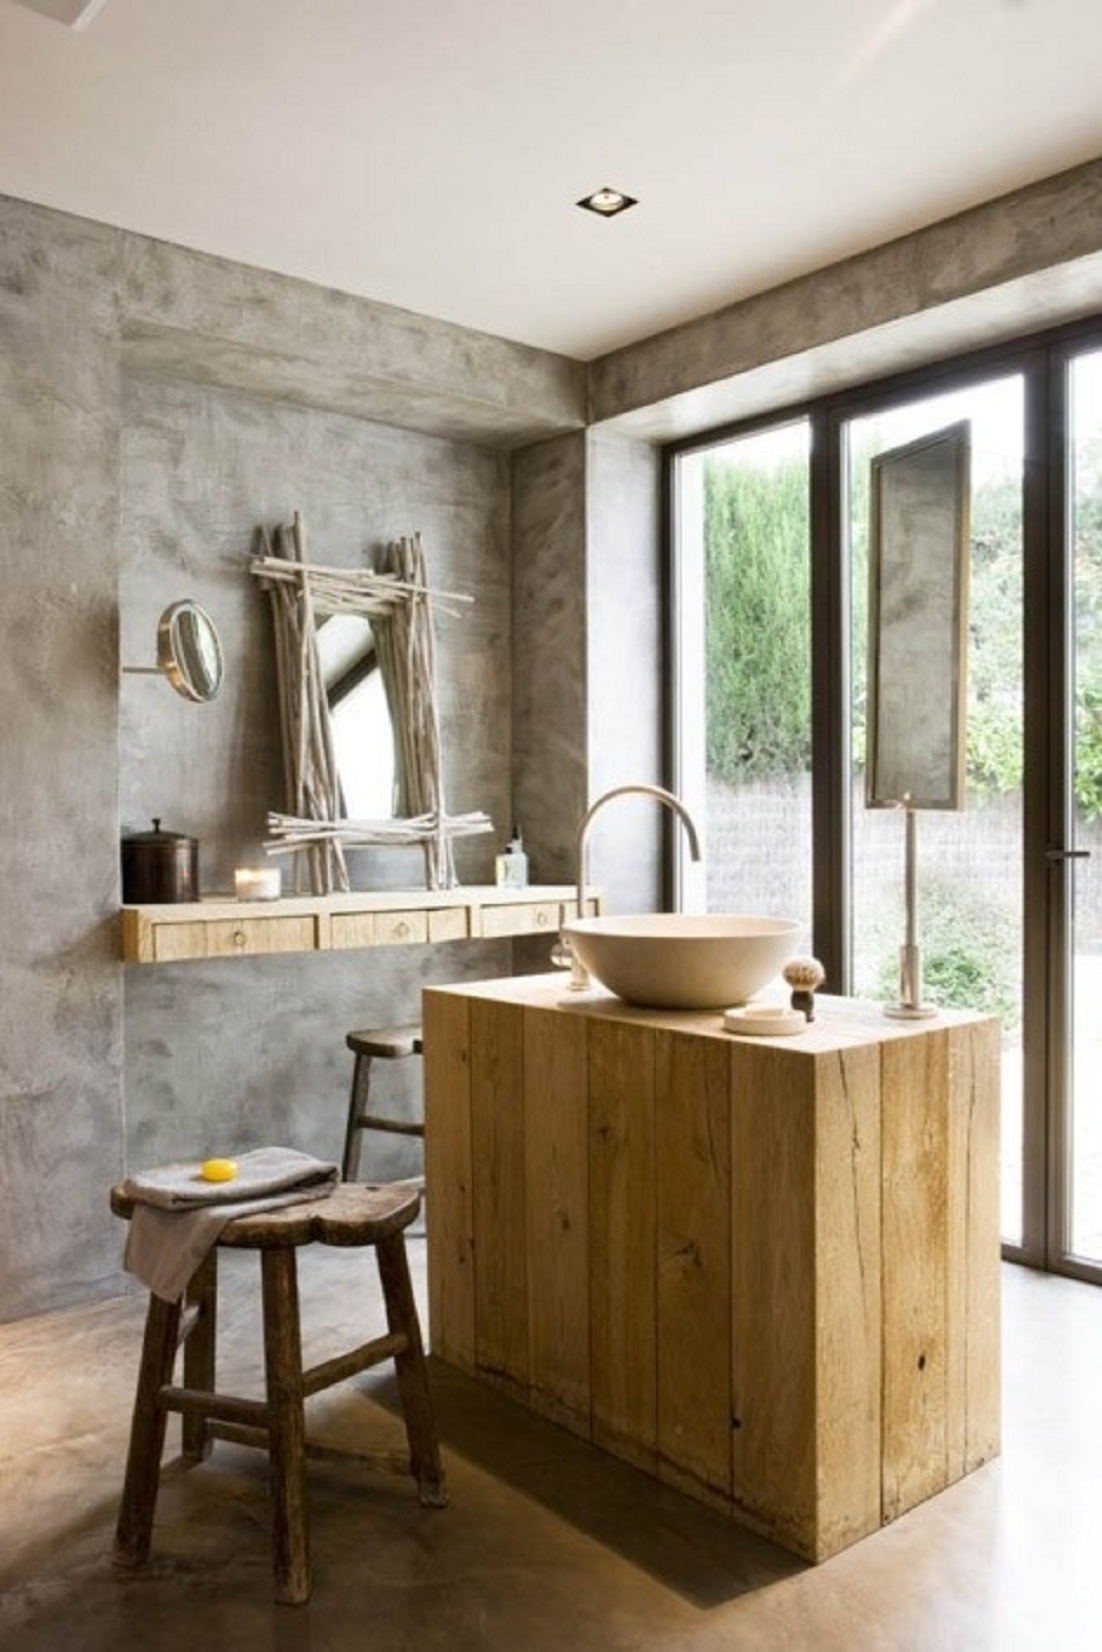 Rustic Bathroom Designs With modern elements